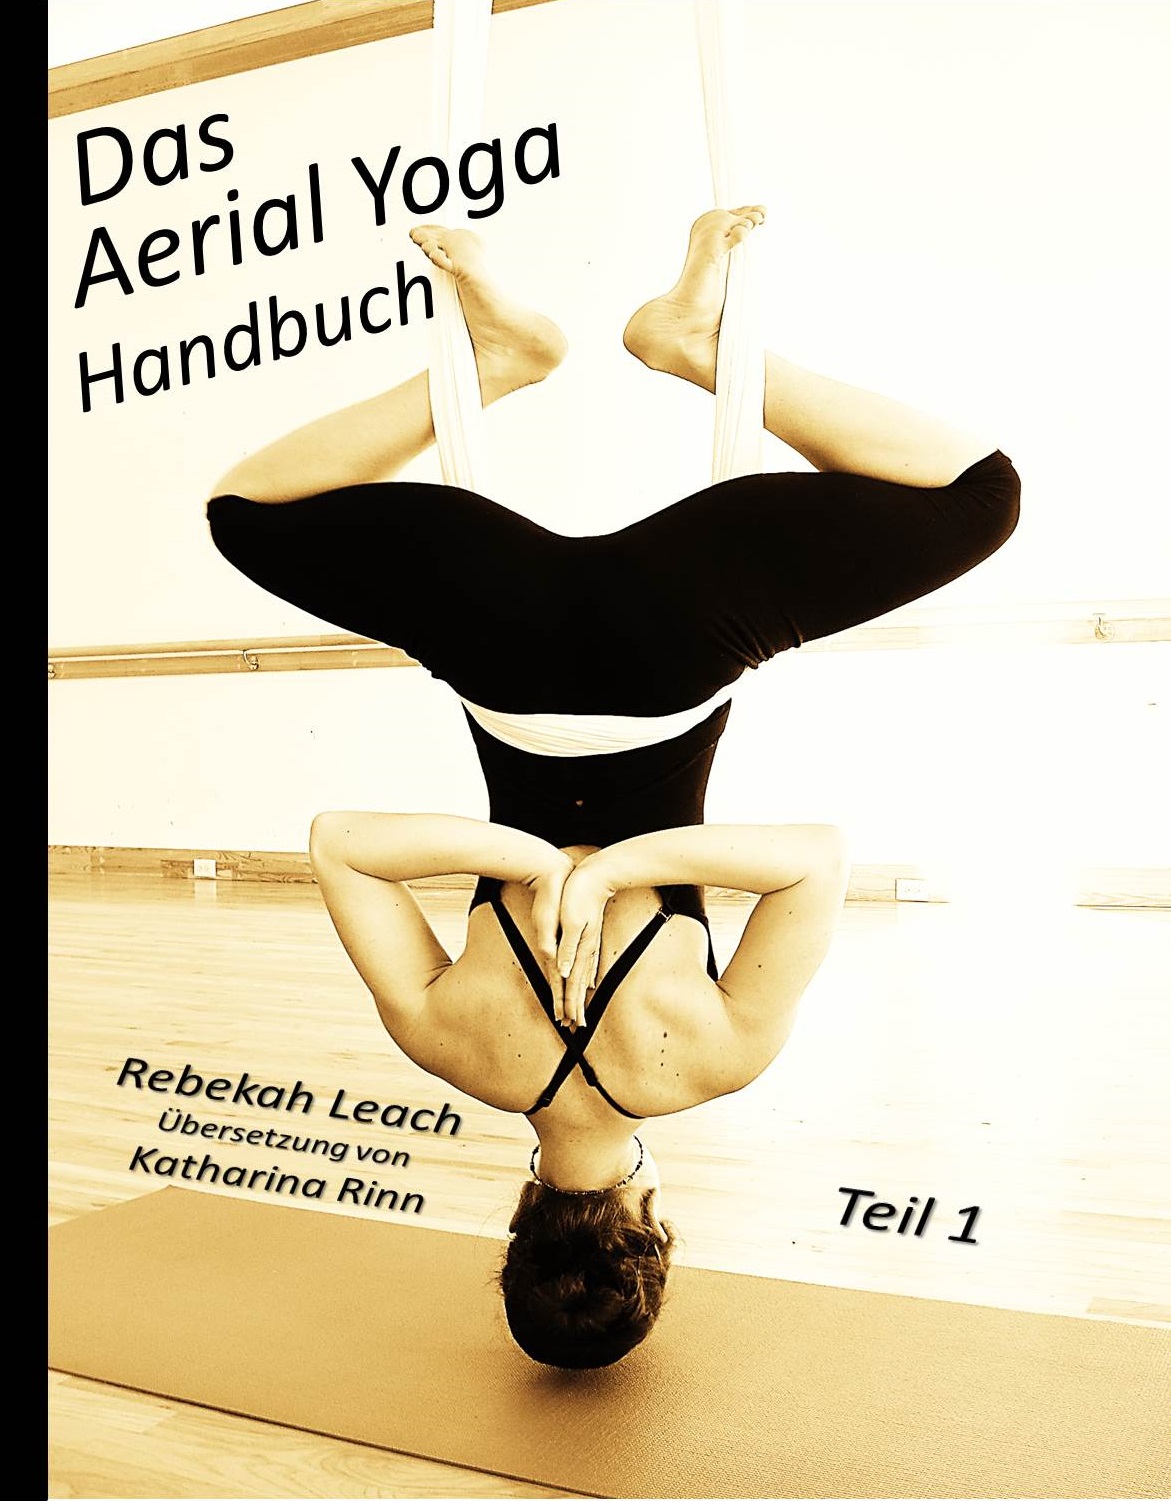 Das Aerial Yoga Handbuch Teil 1 is Here! www.aerialdancing picture photo